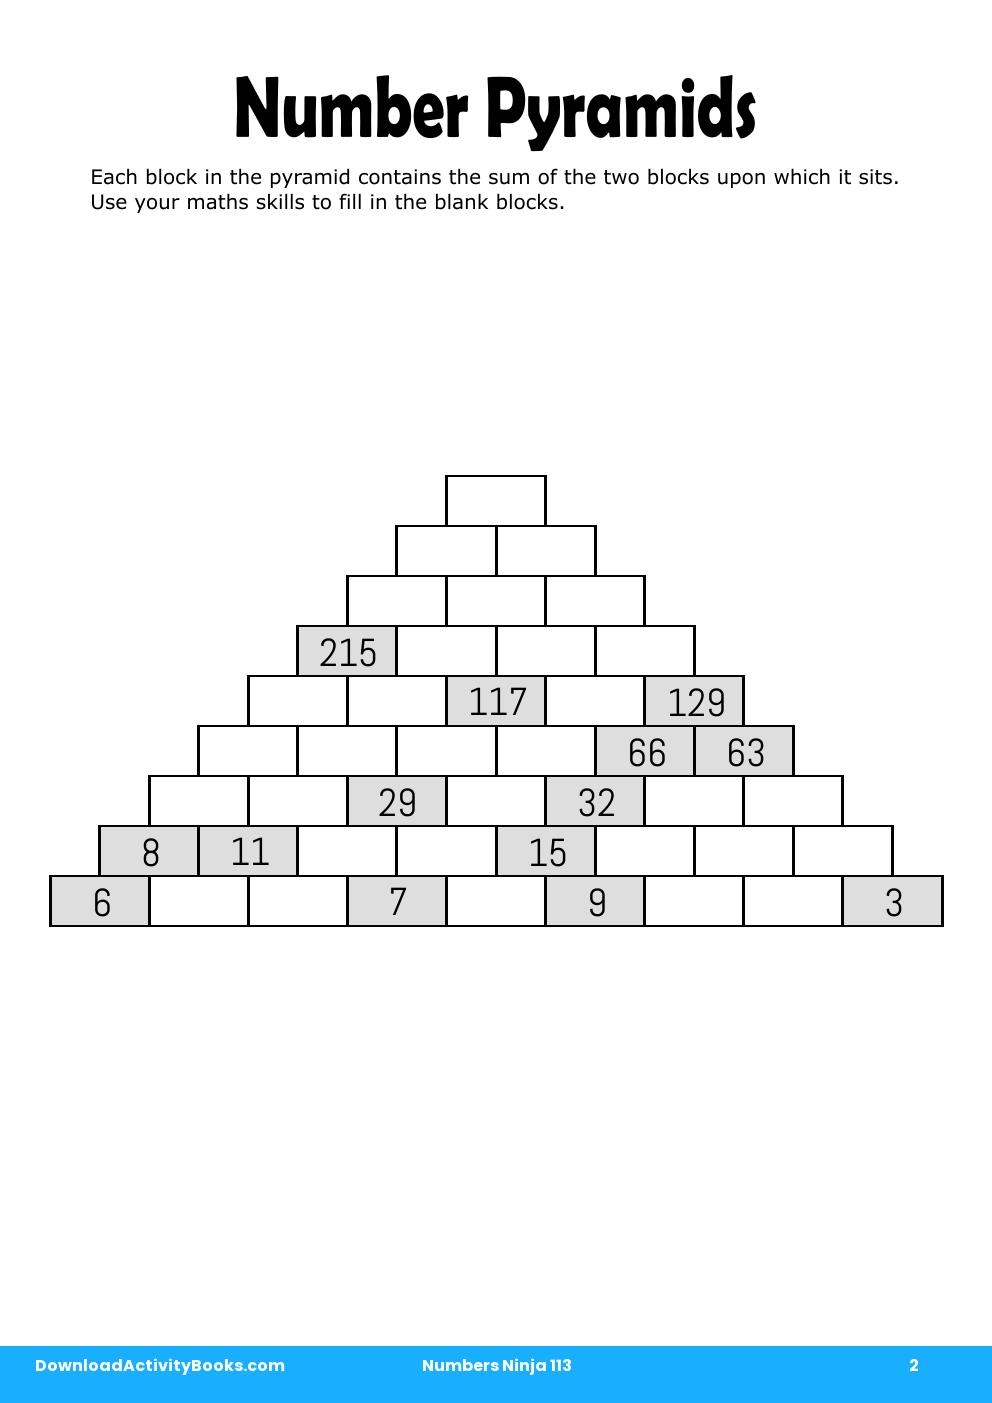 Number Pyramids in Numbers Ninja 113